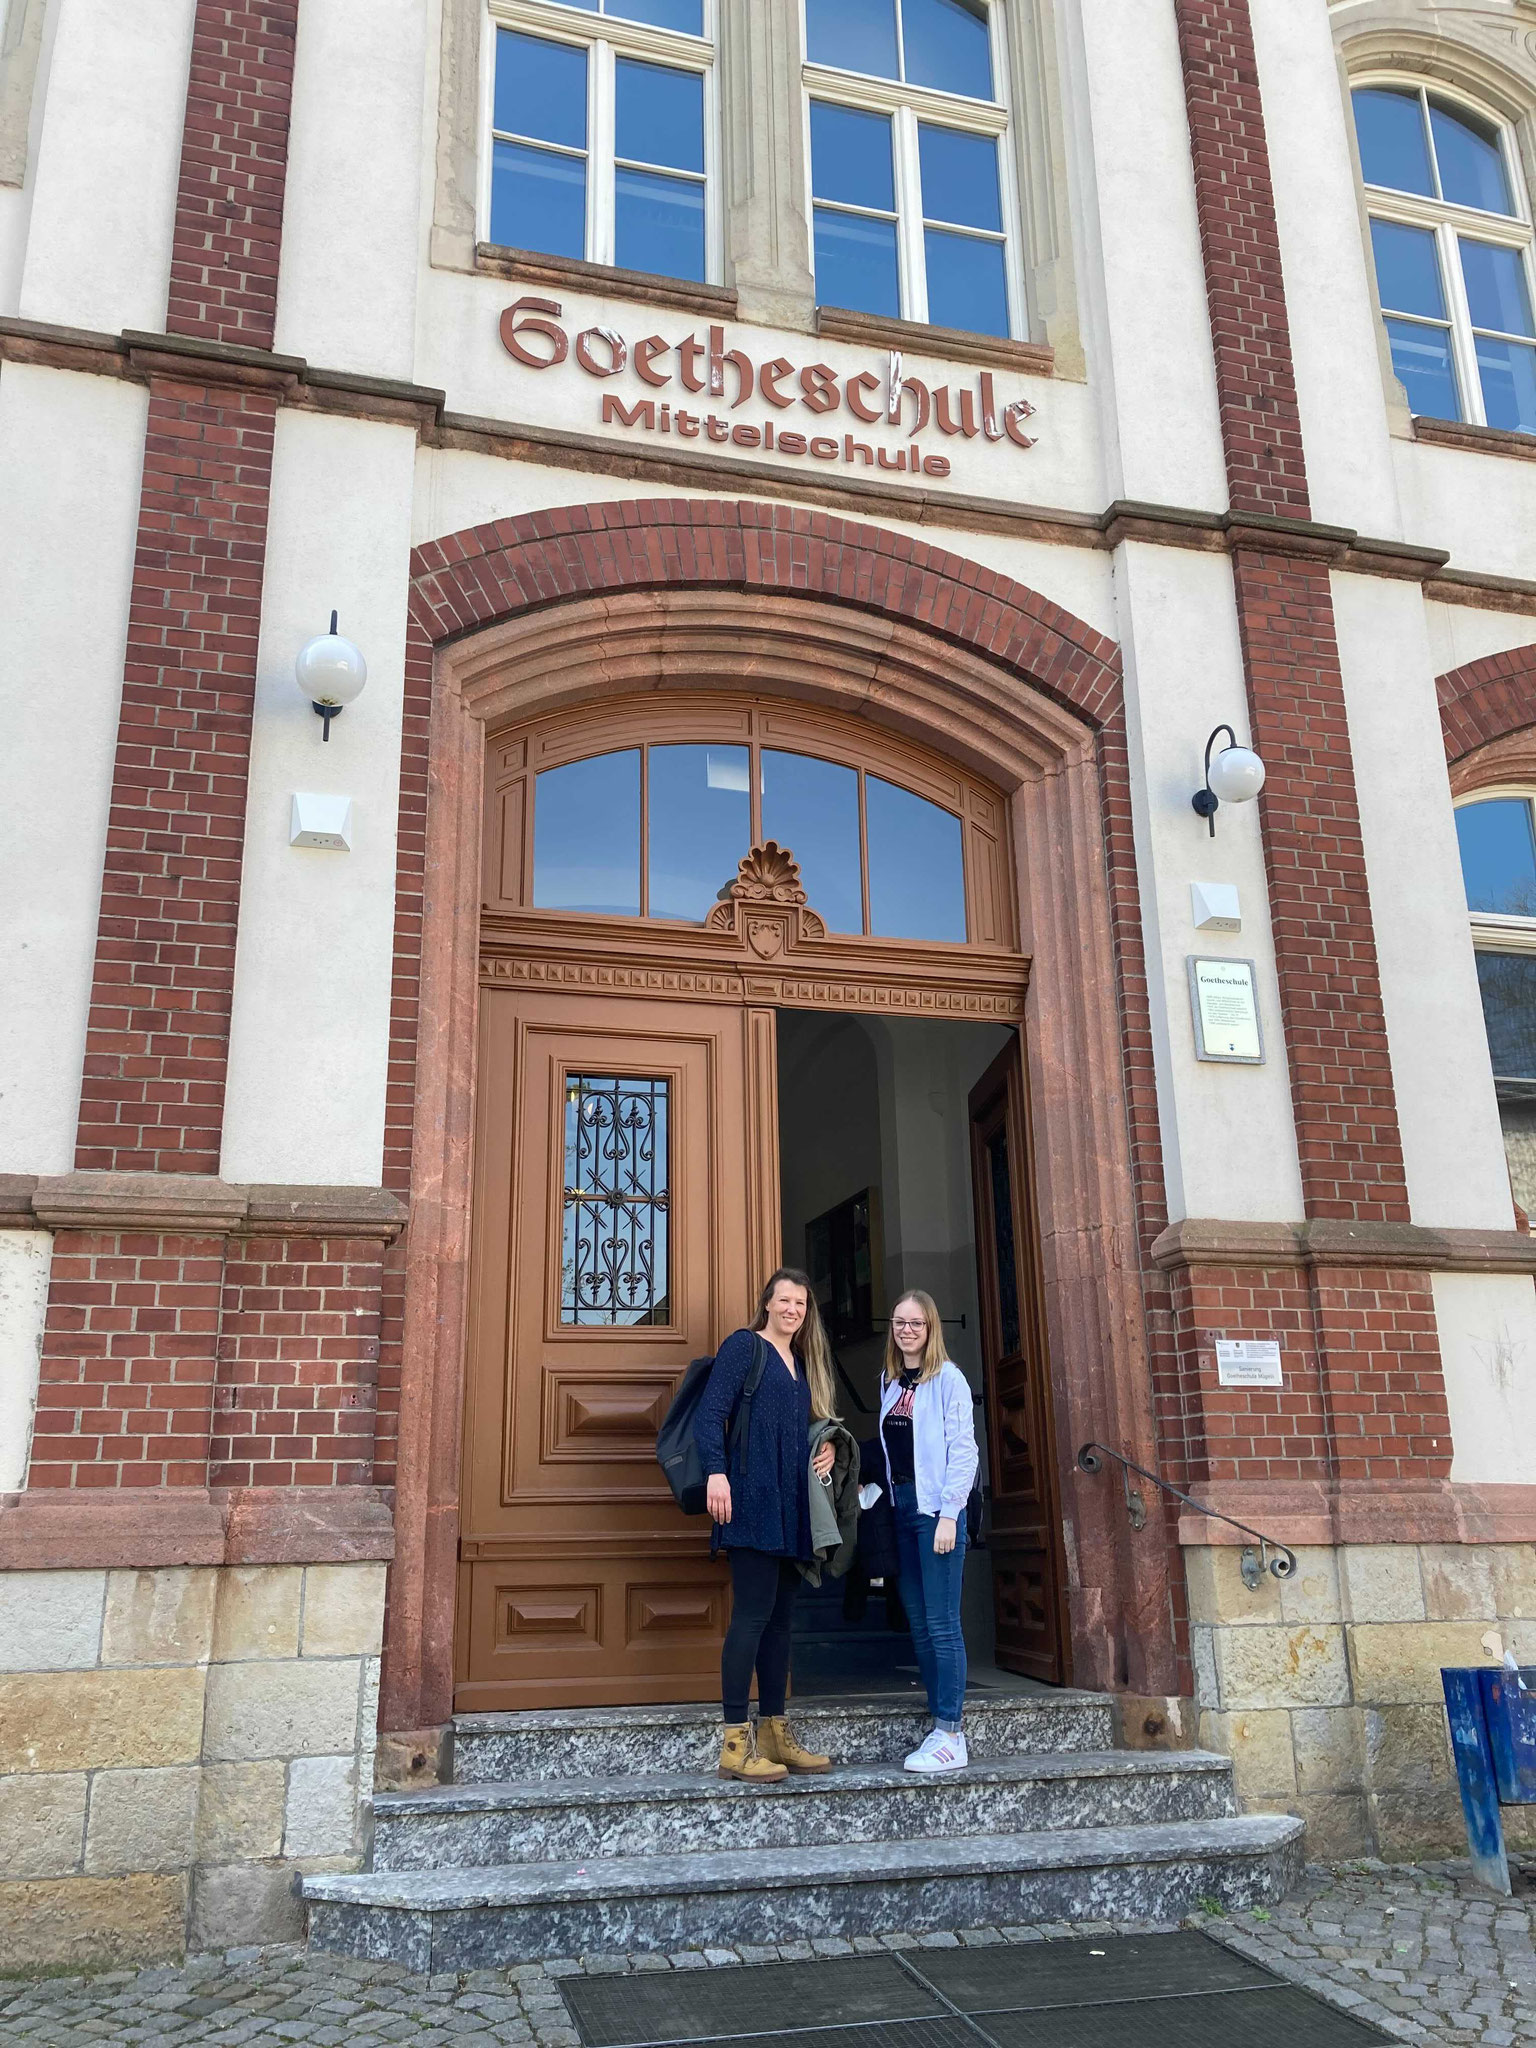 Goetheschule Mügeln